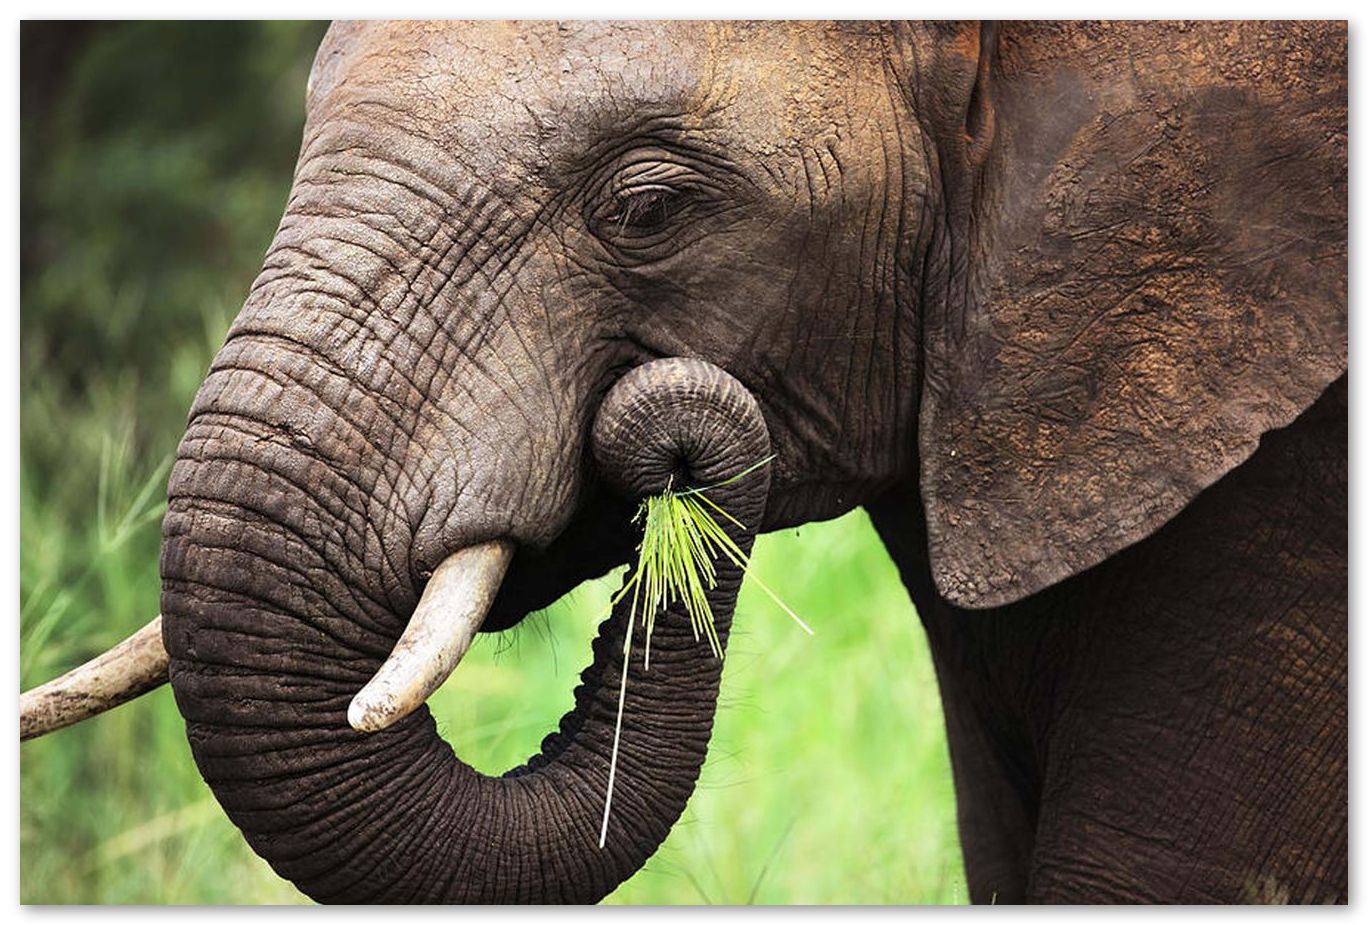 Elephant eating   - @chusna